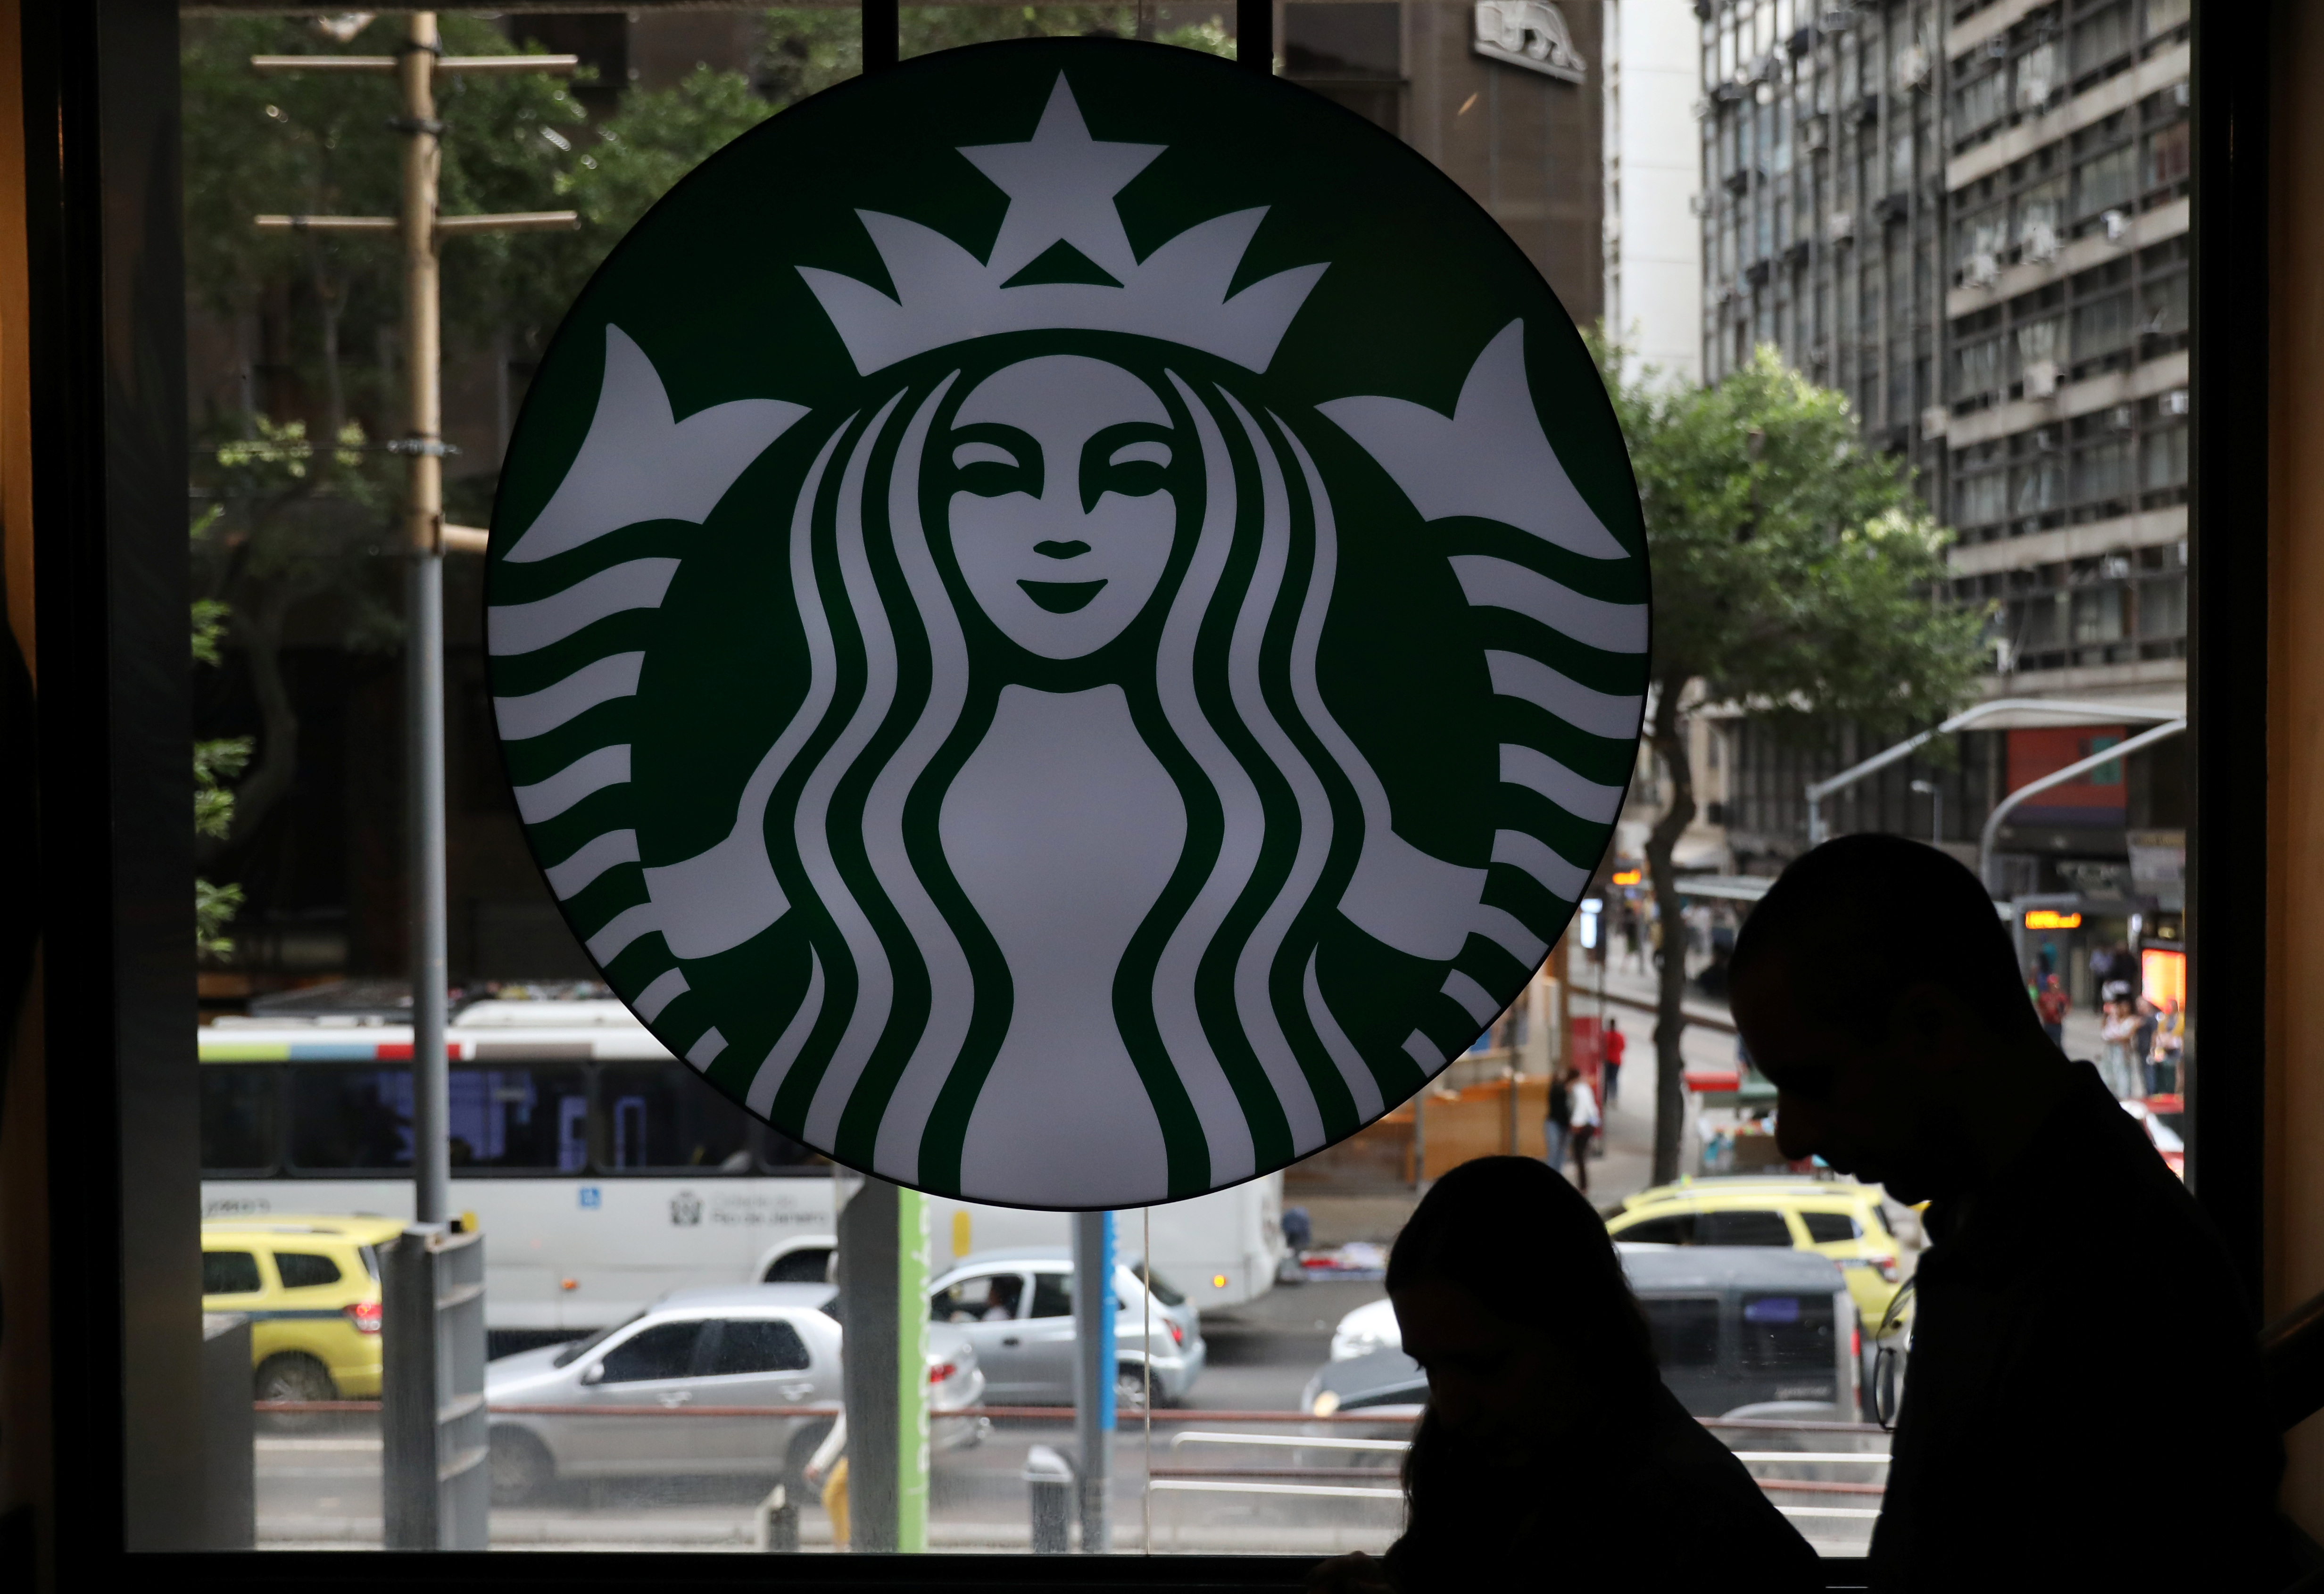 Customers pass by the logo of an American coffee company Starbucks inside a coffee shop in Rio de Janeiro